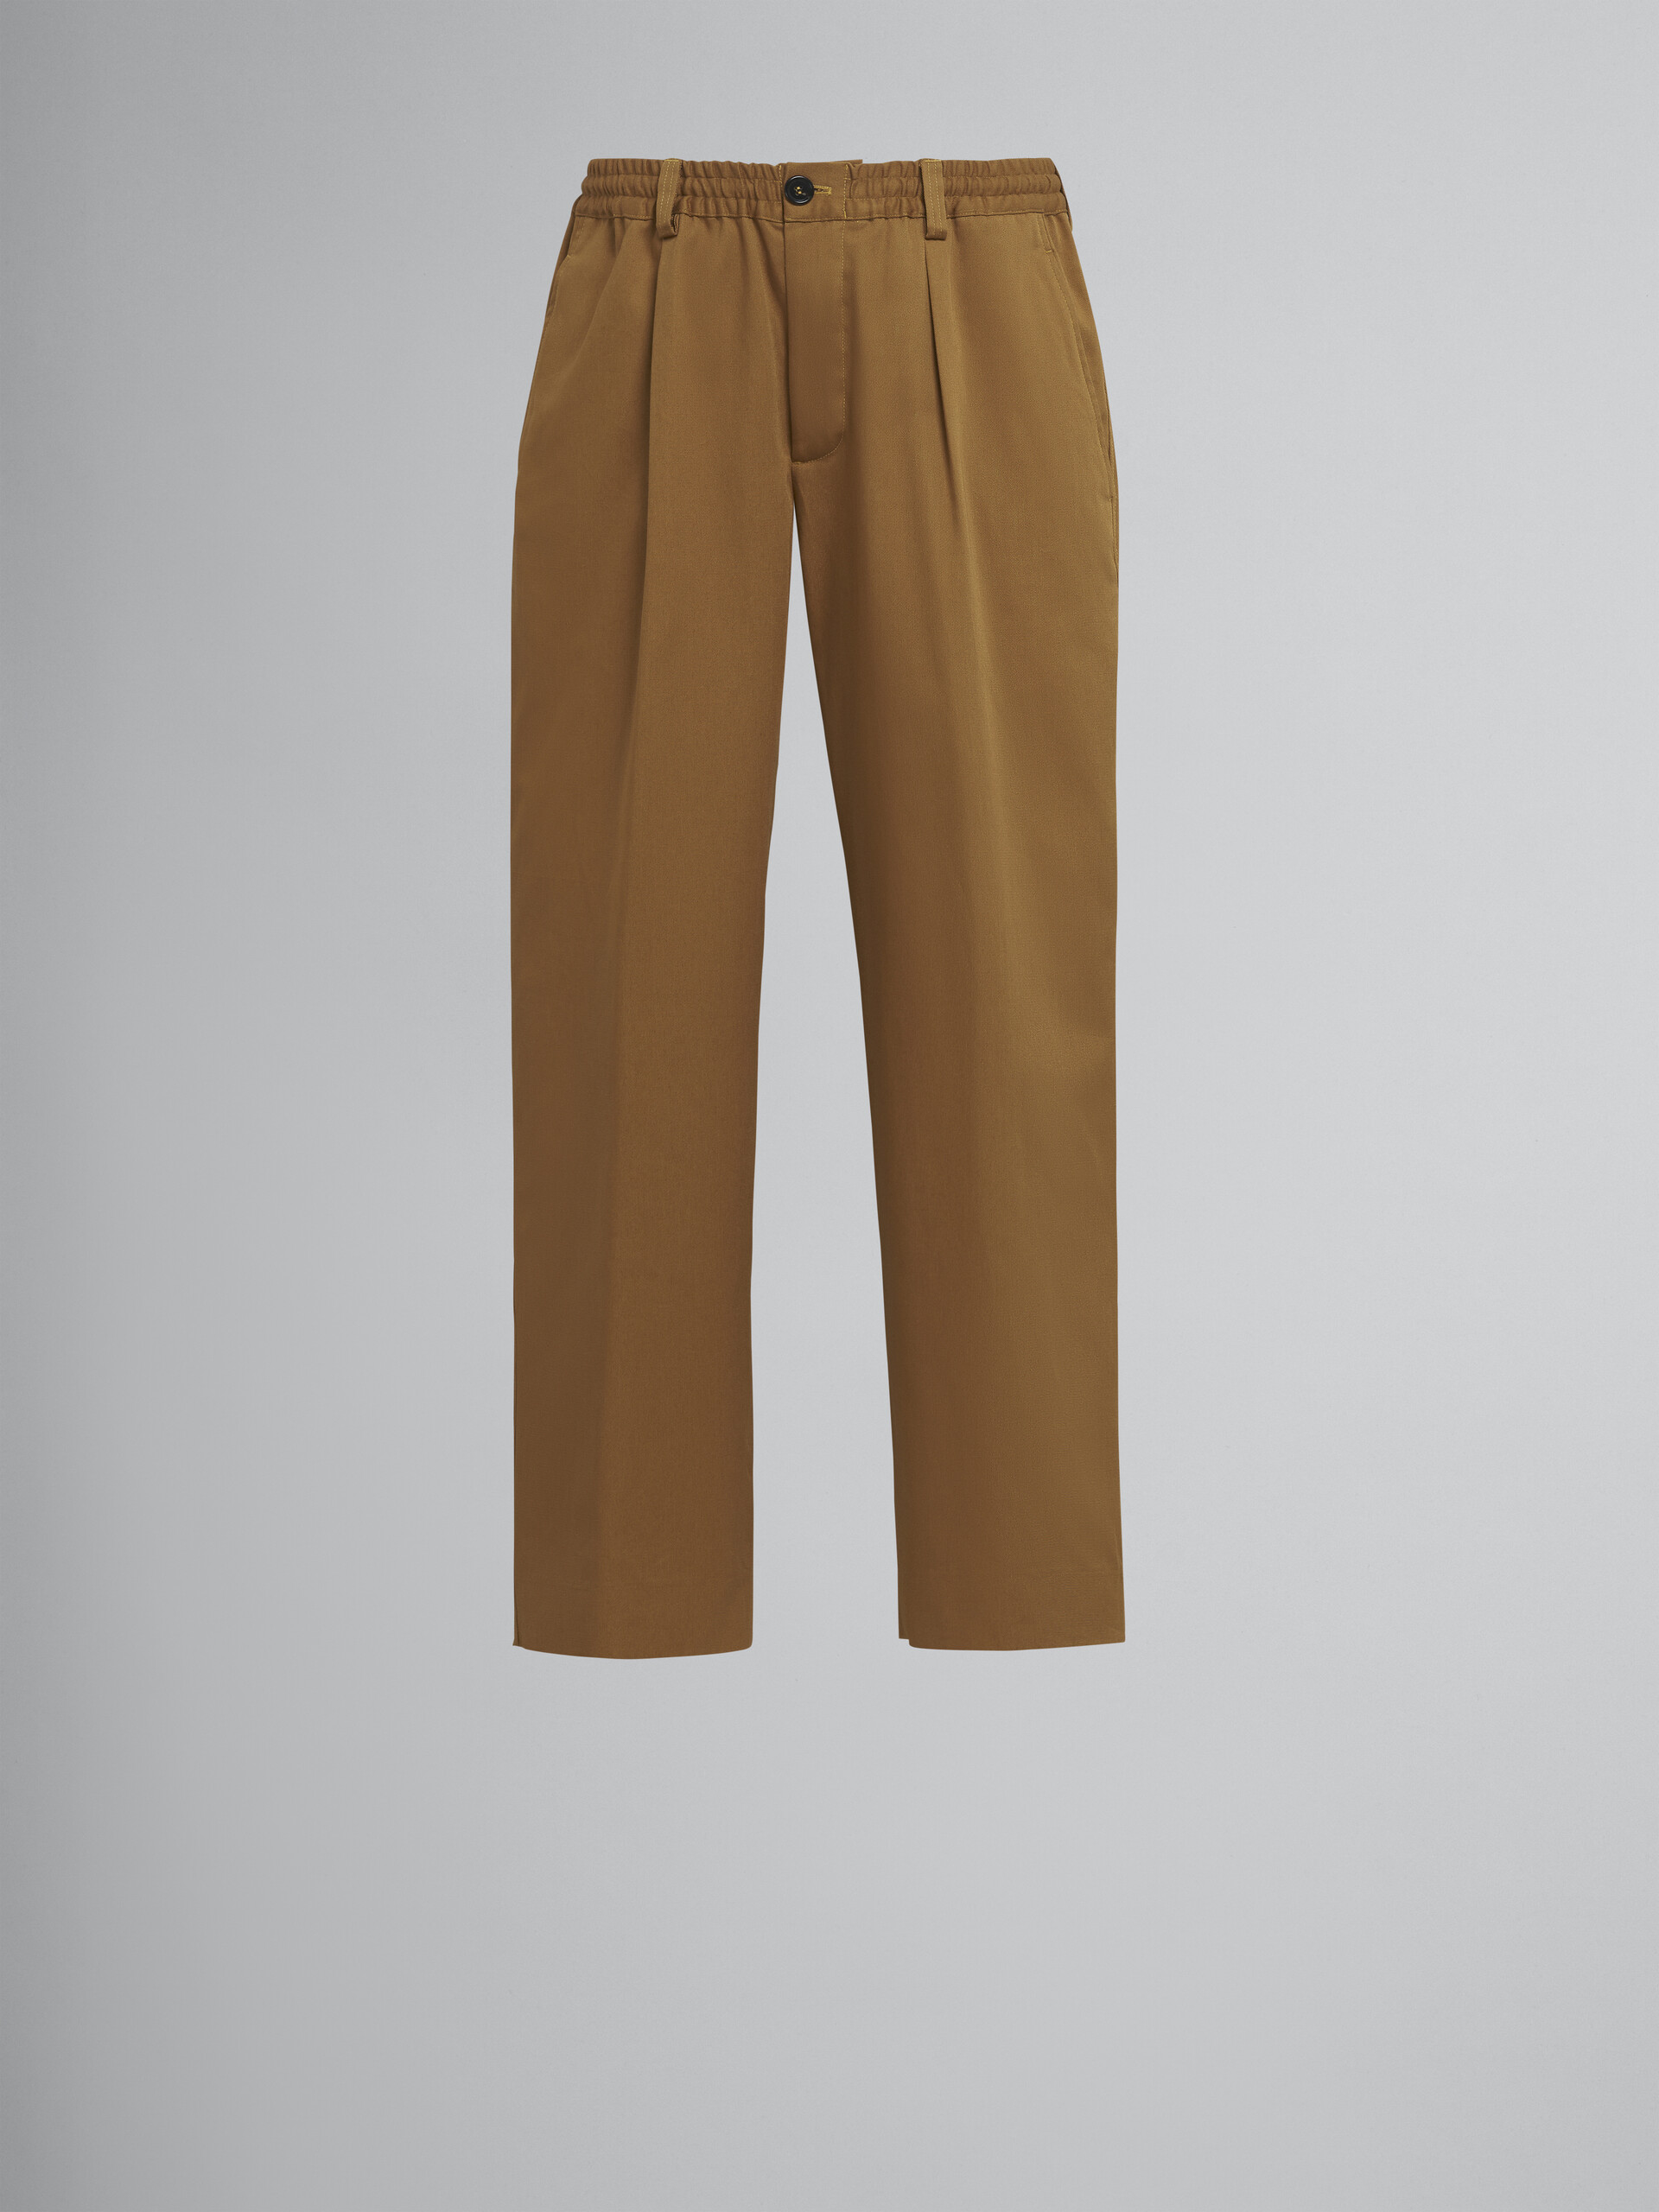 Hose aus brauner Baumwollgabardine - Hosen - Image 1